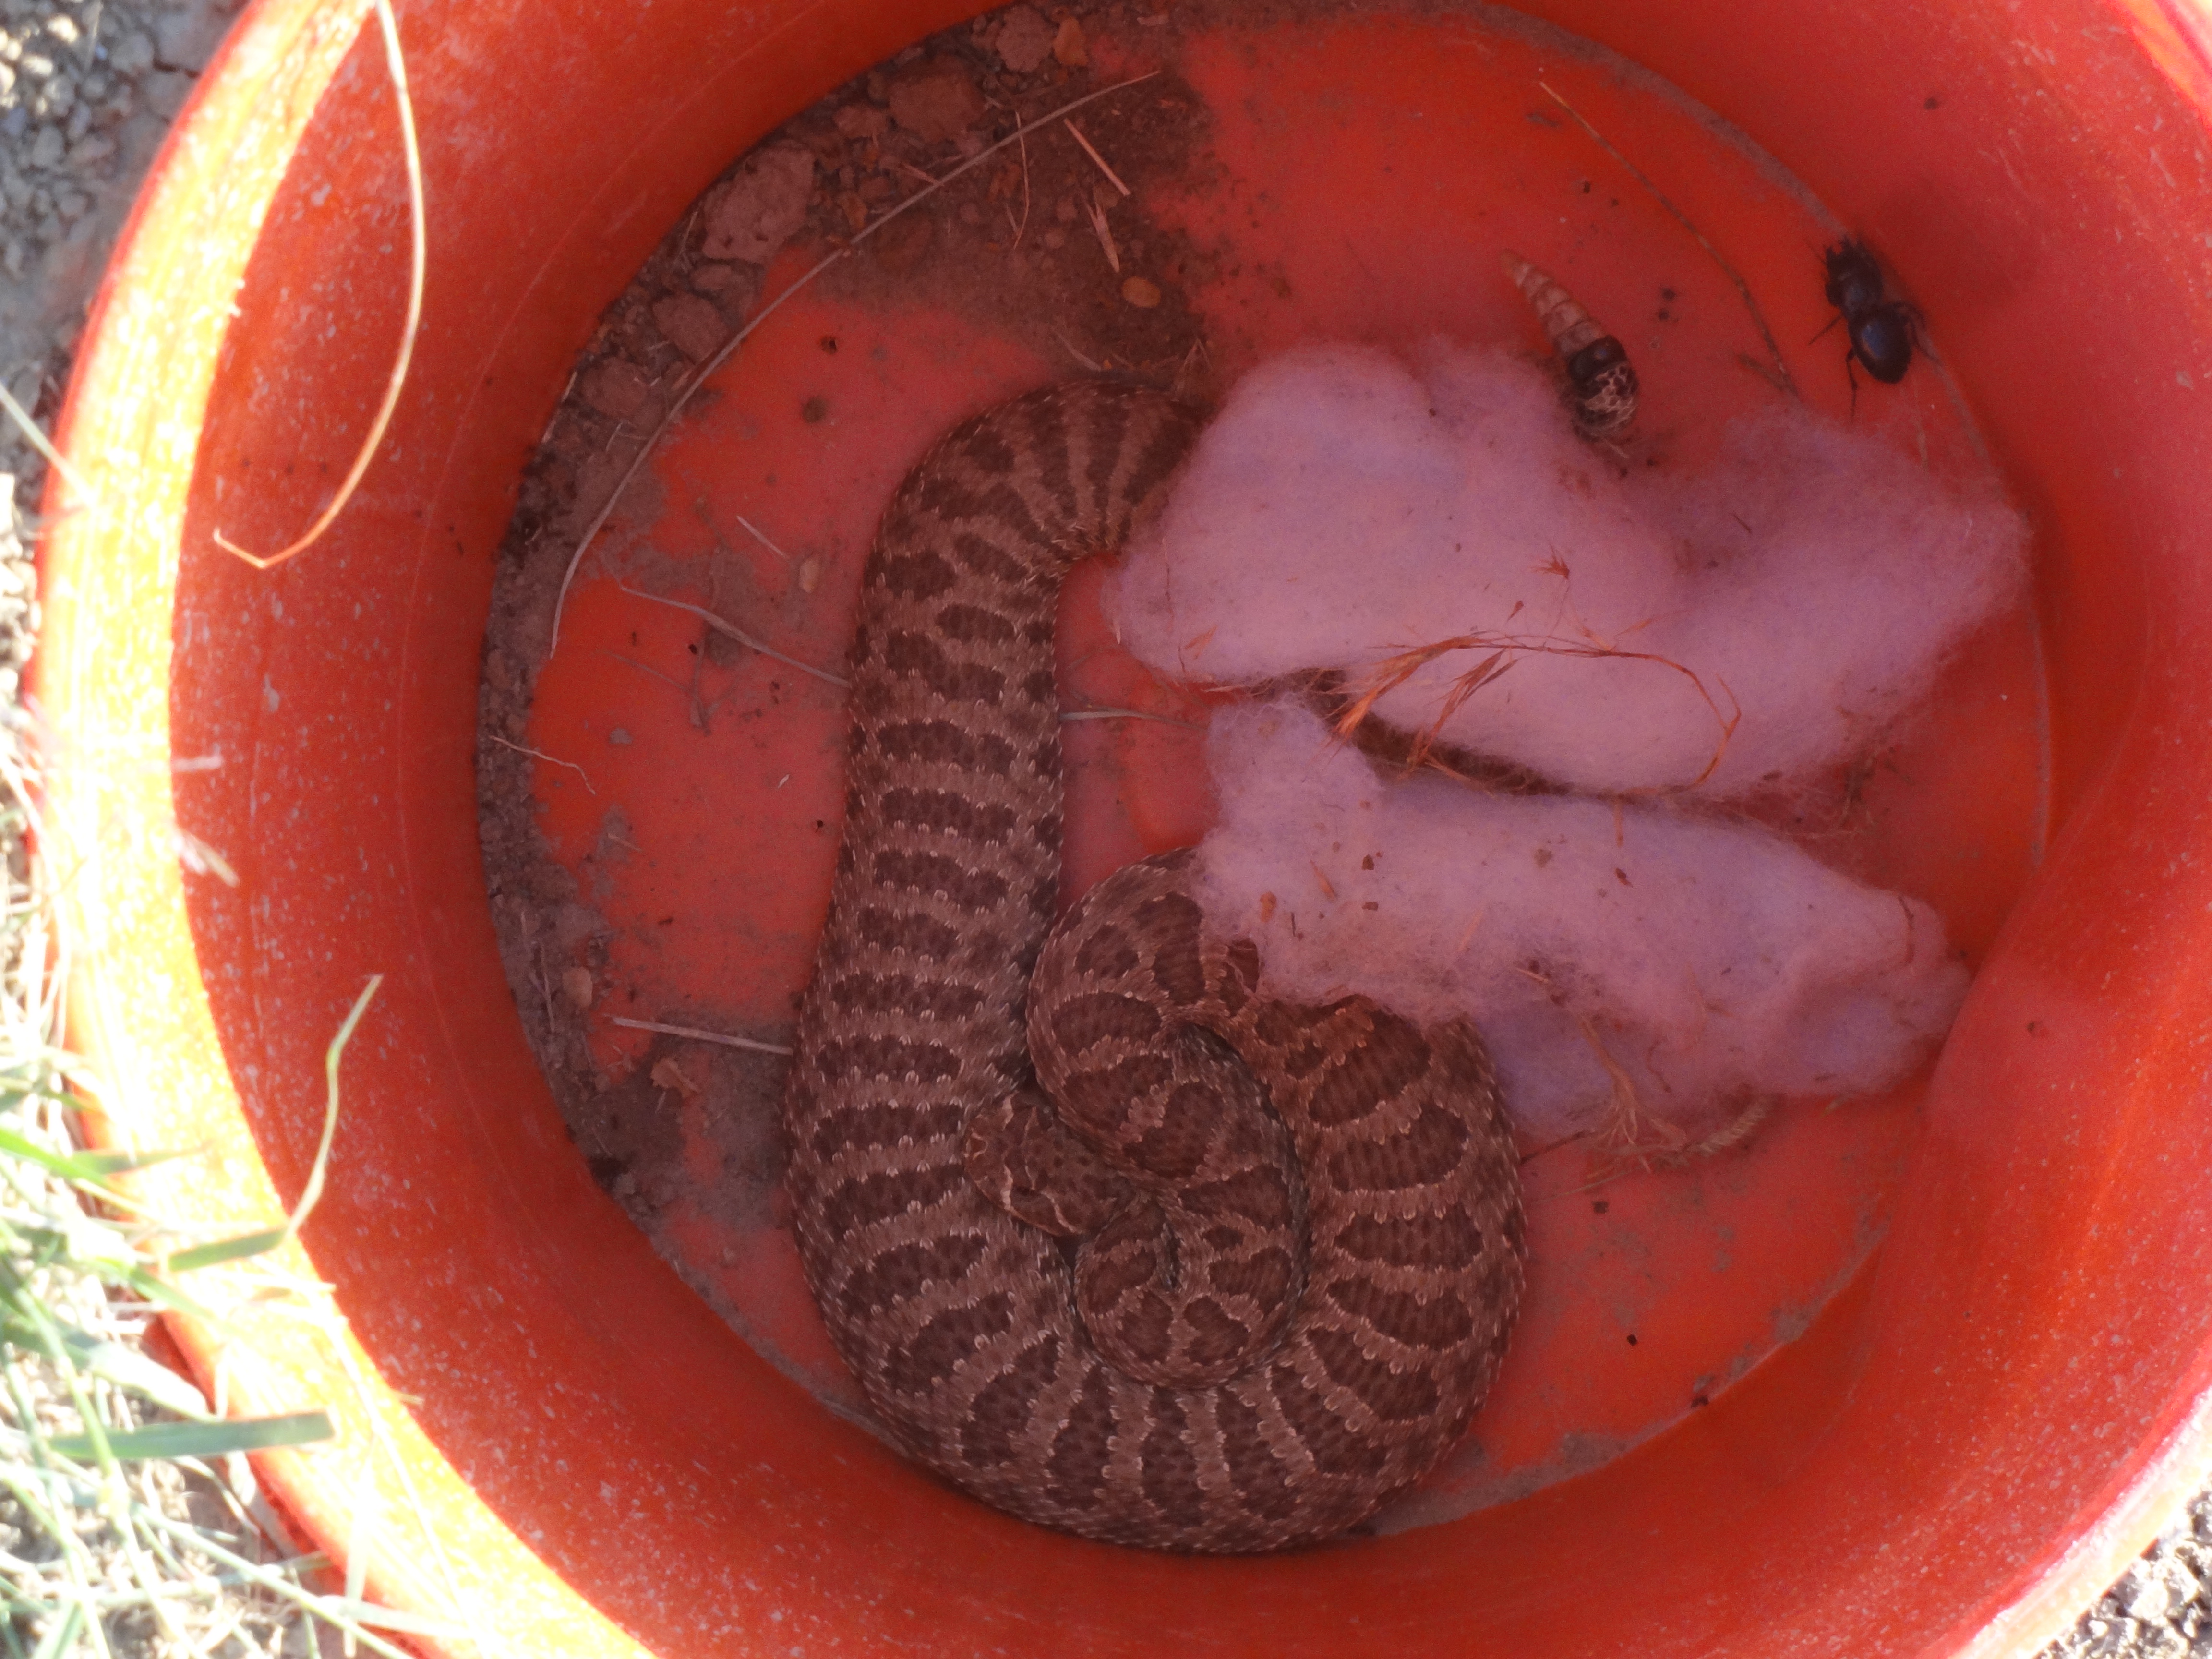 Rattlesnake in pitfall trap, Thunder Basin National Grassland, WY